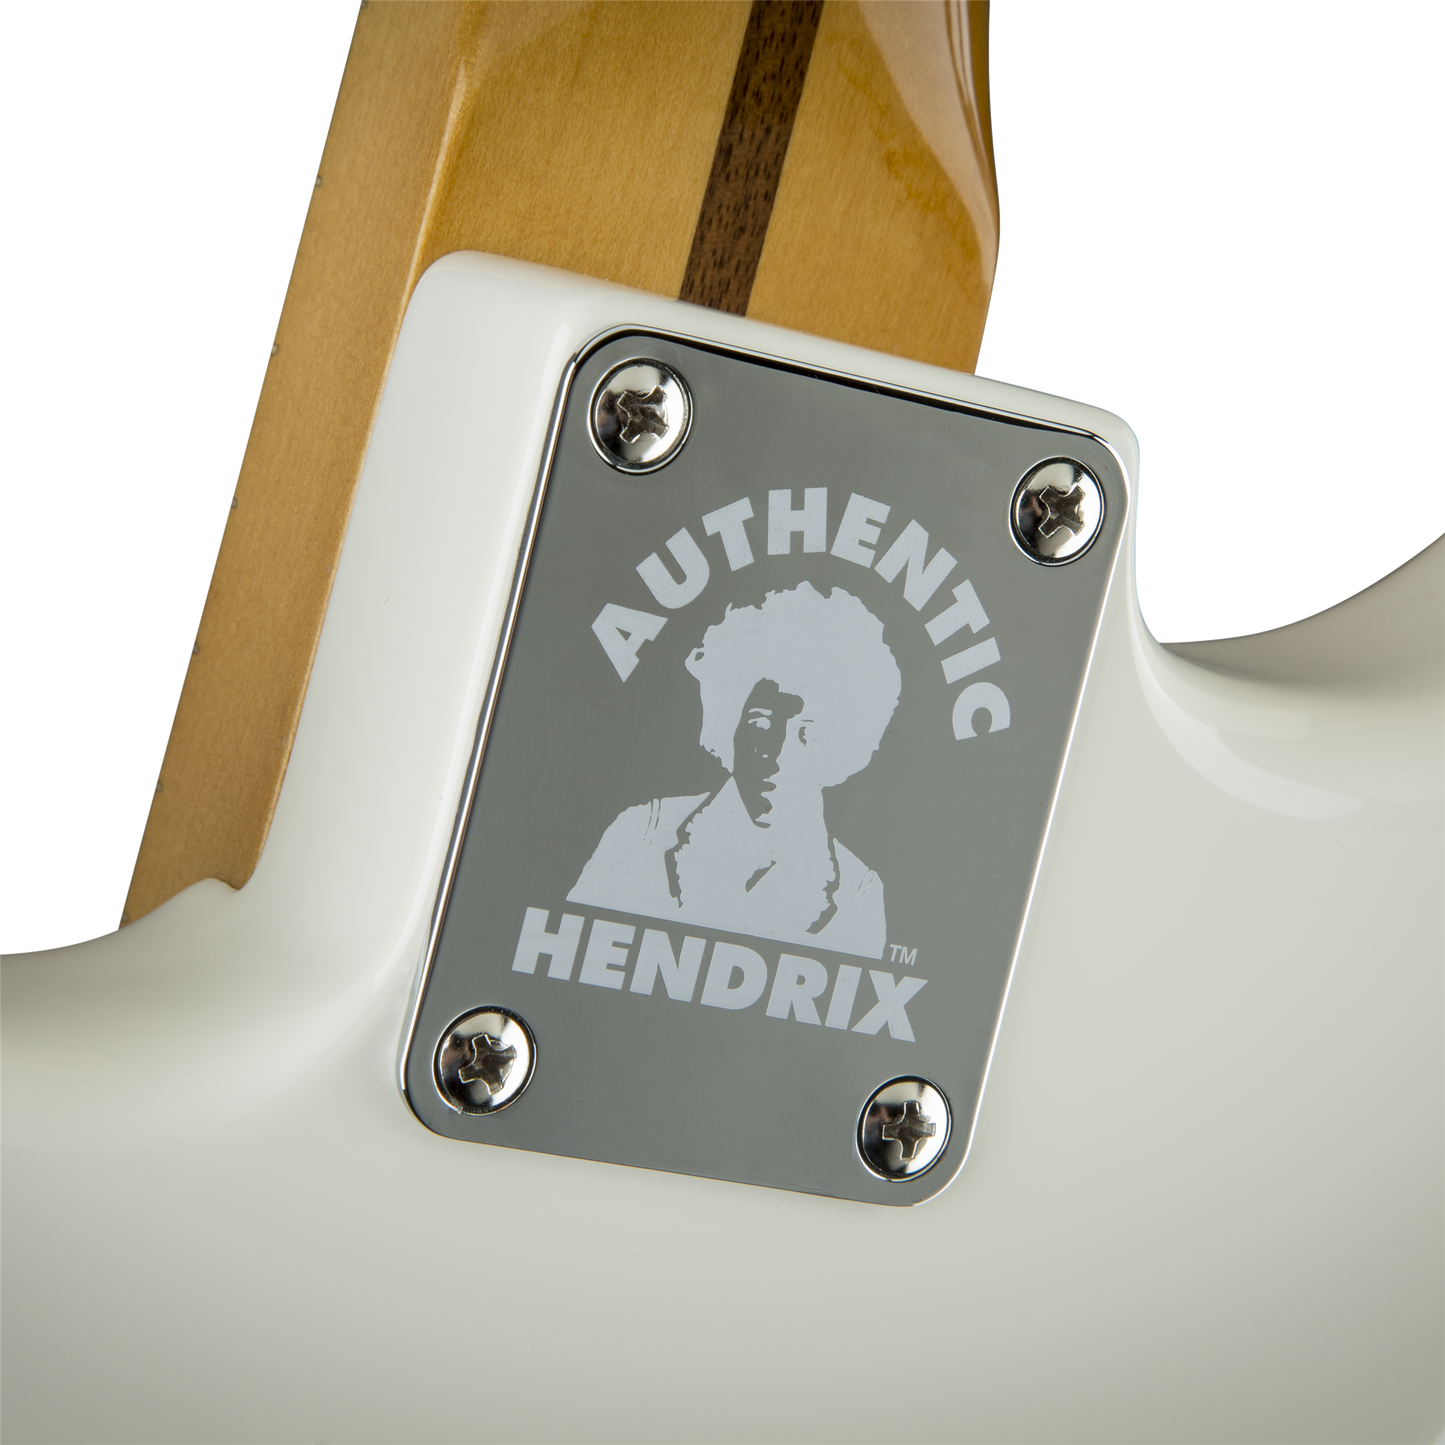 Fender Jimi Hendrix Stratocaster - Olympic White